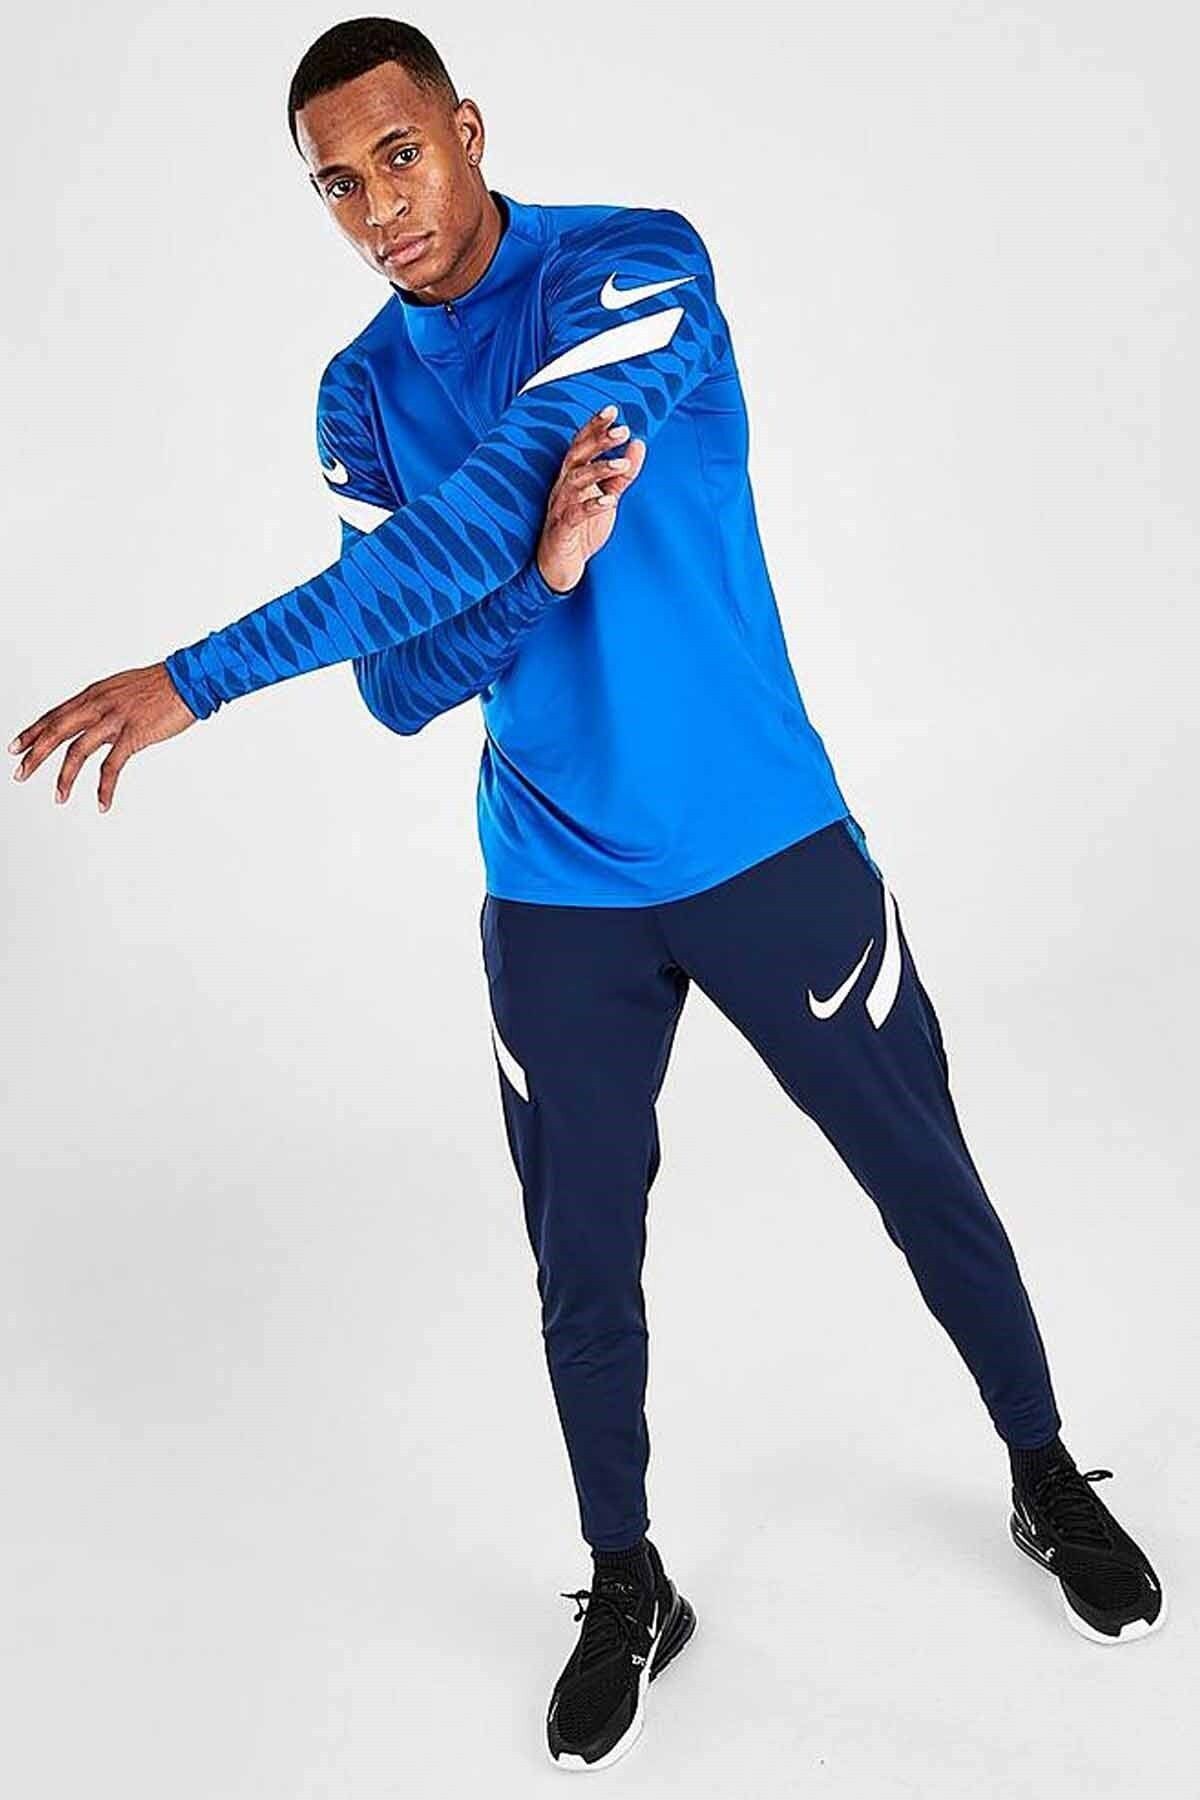 Nike M Ny Df Ss Top Erkek Mavi Günlük Stil Tişört DM7825-441